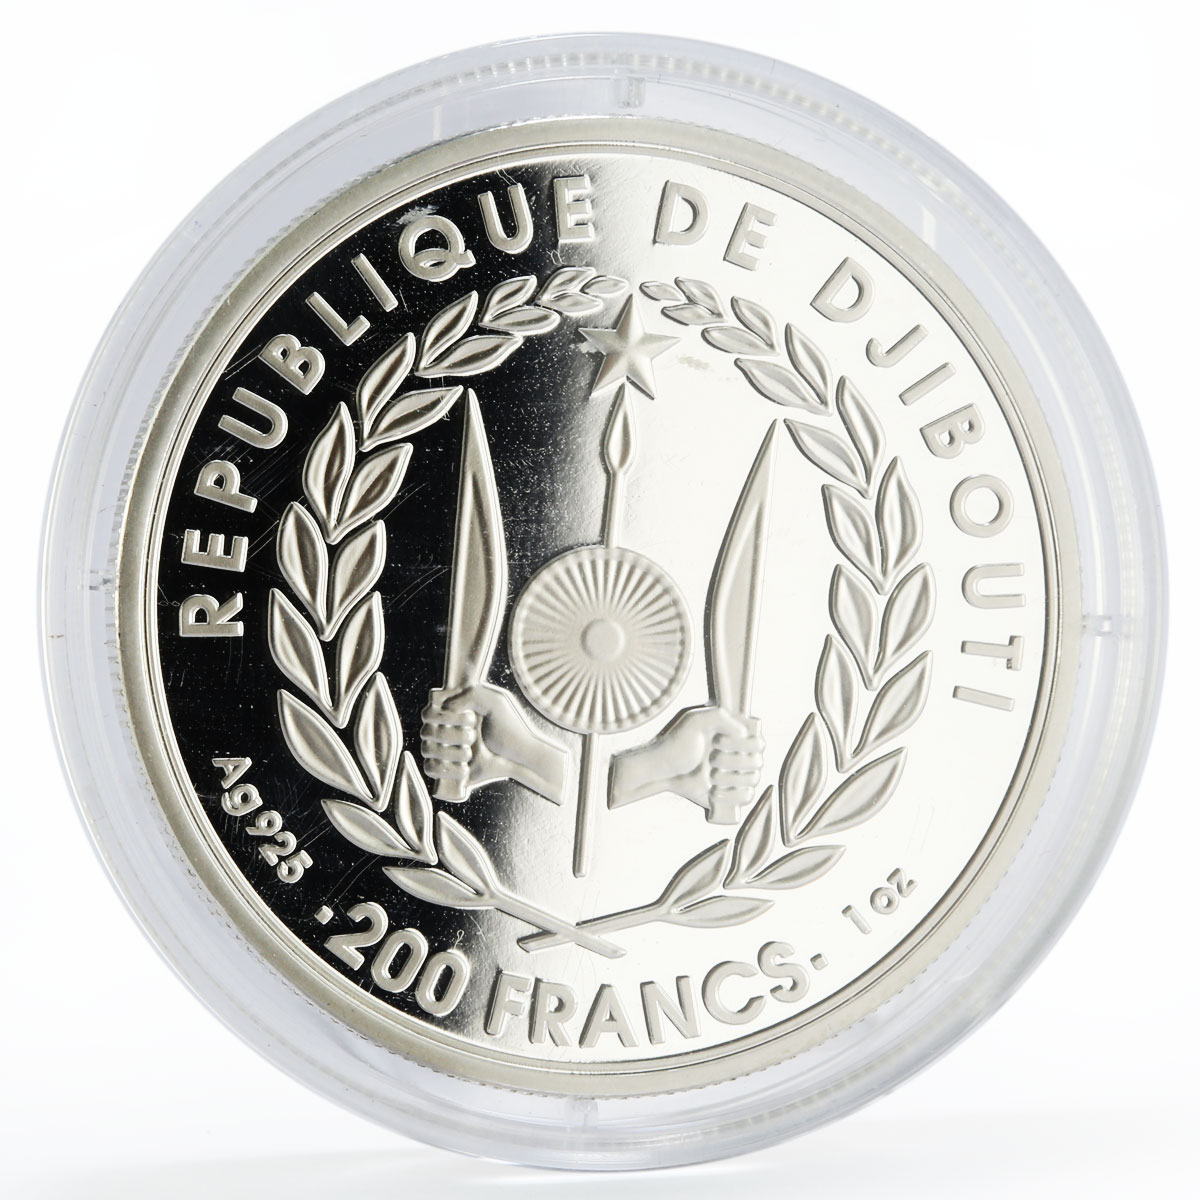 Djibouti 200 francs Tour de France Cycling Track Map coin 2018